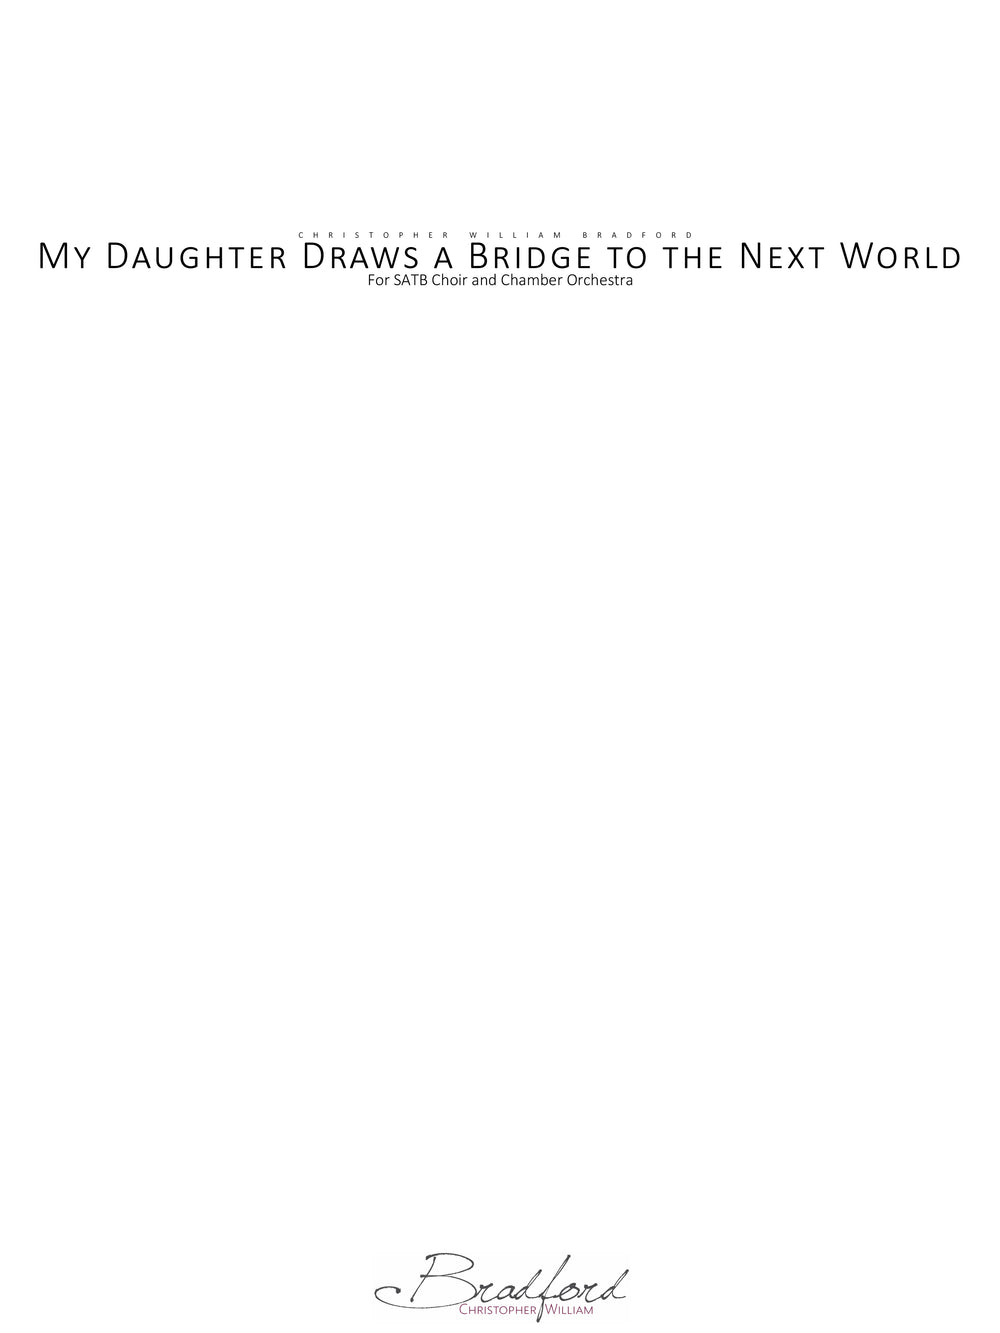 My Daughter Draws a Bridge to the Next World